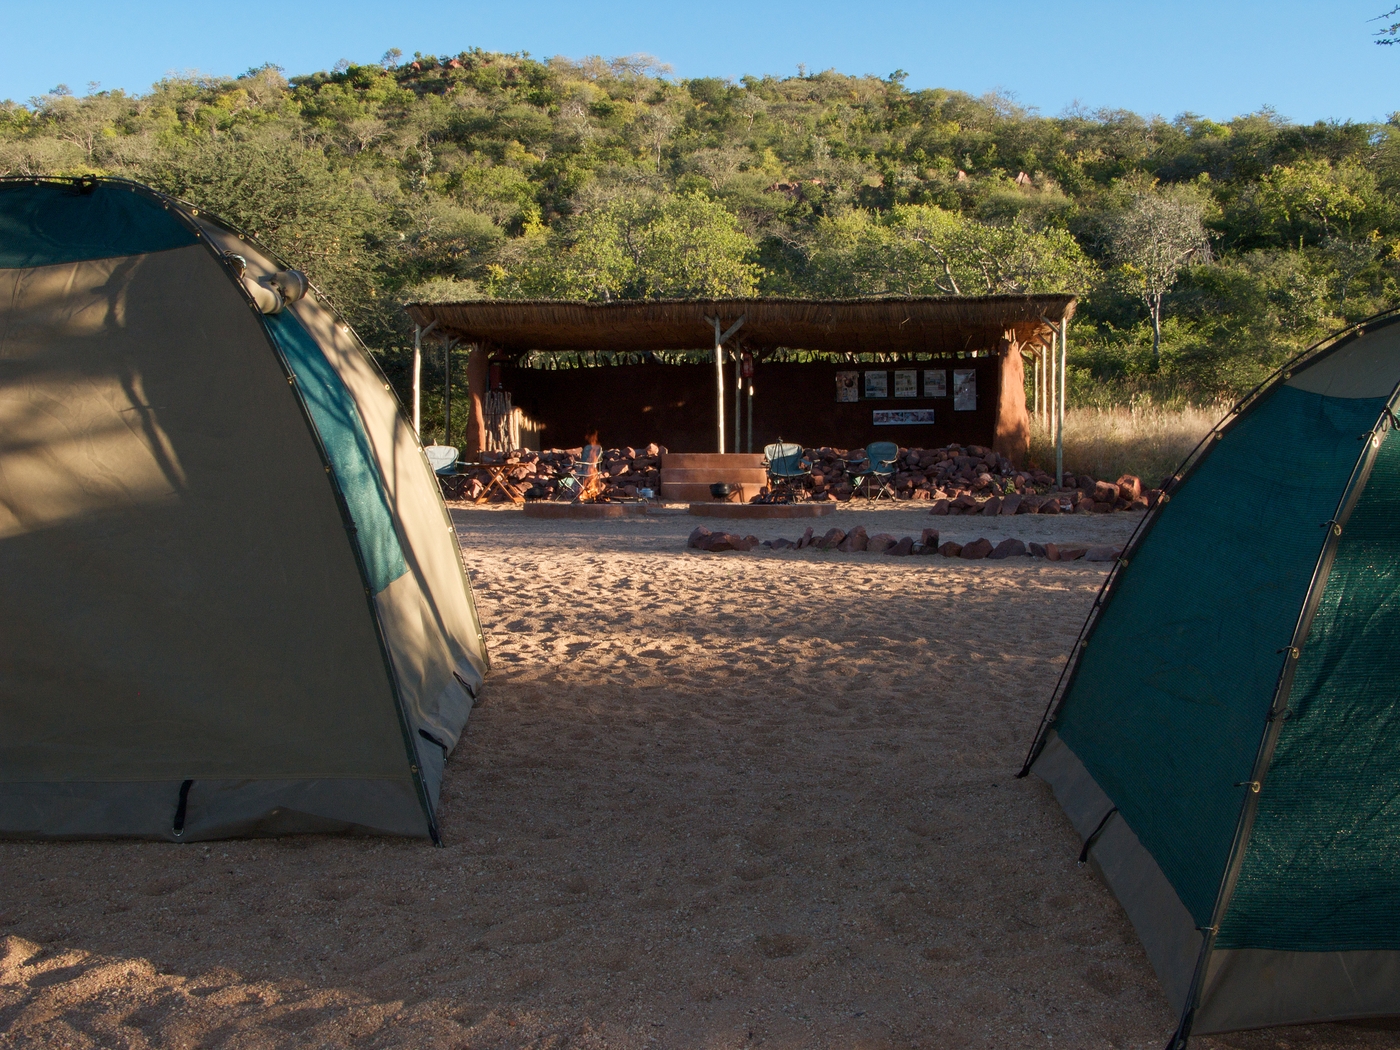 The Omboroko Campsite